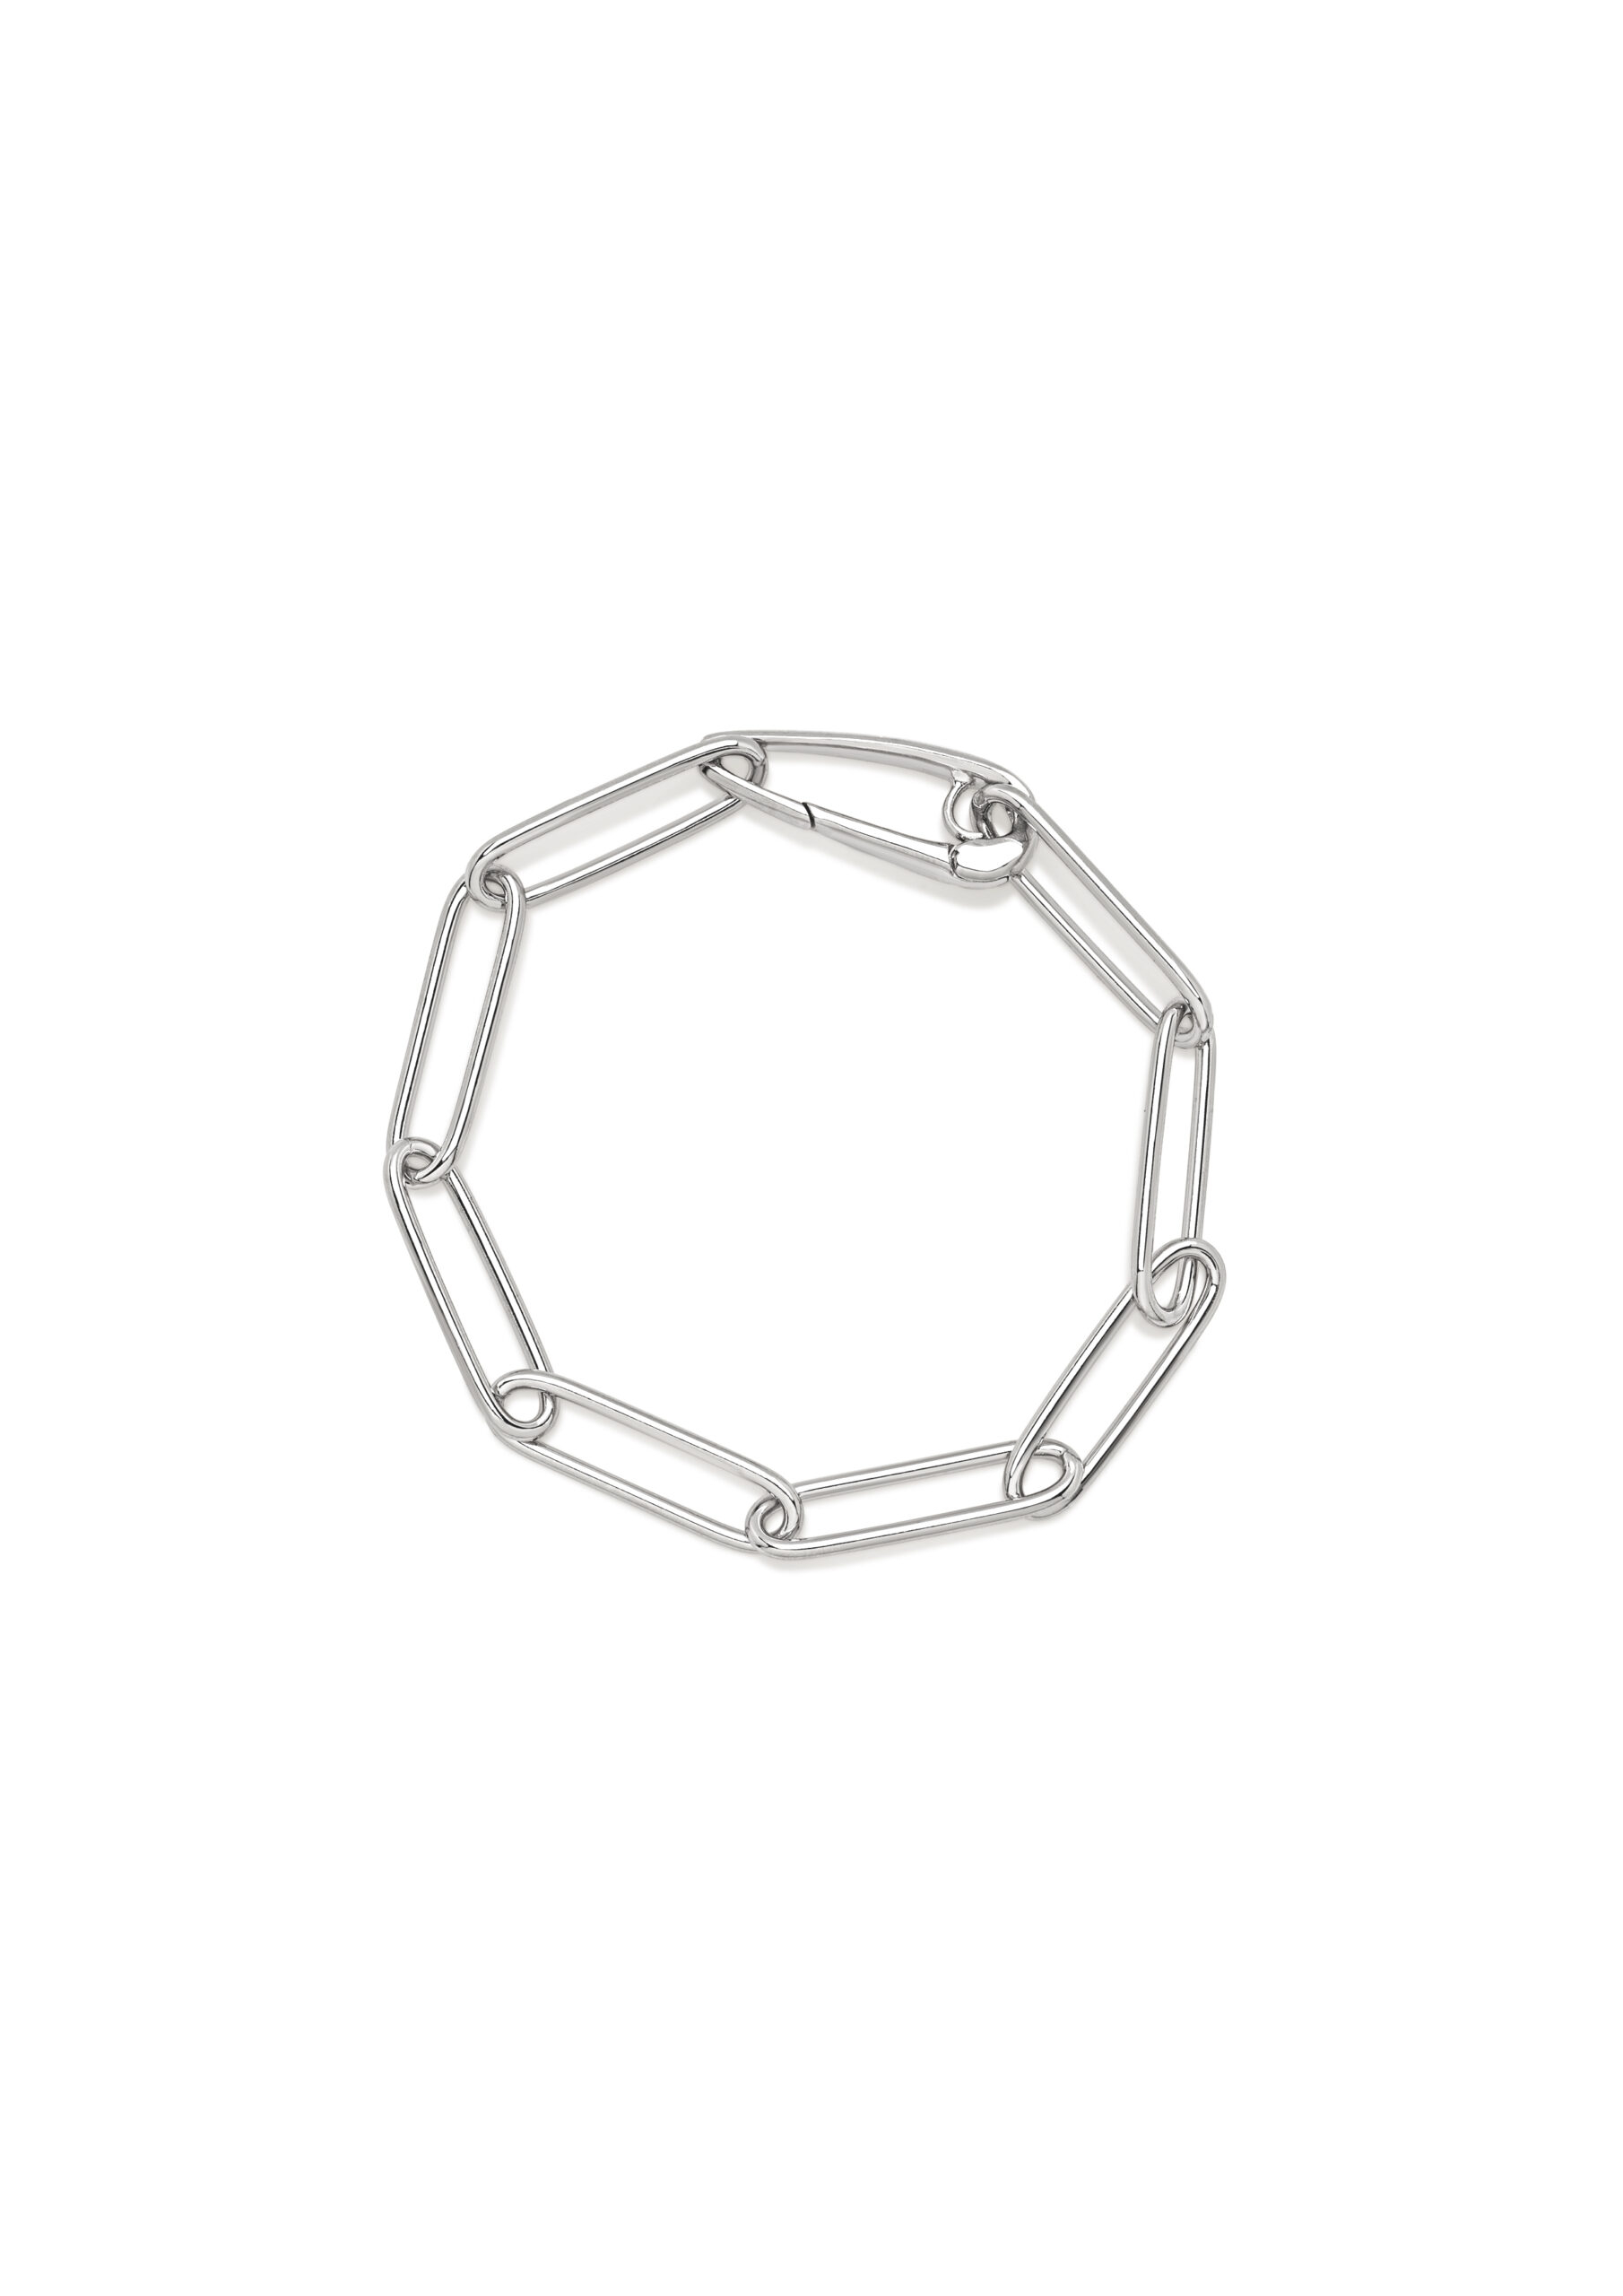 Oval Links Bracelet in Silver | Chantecler